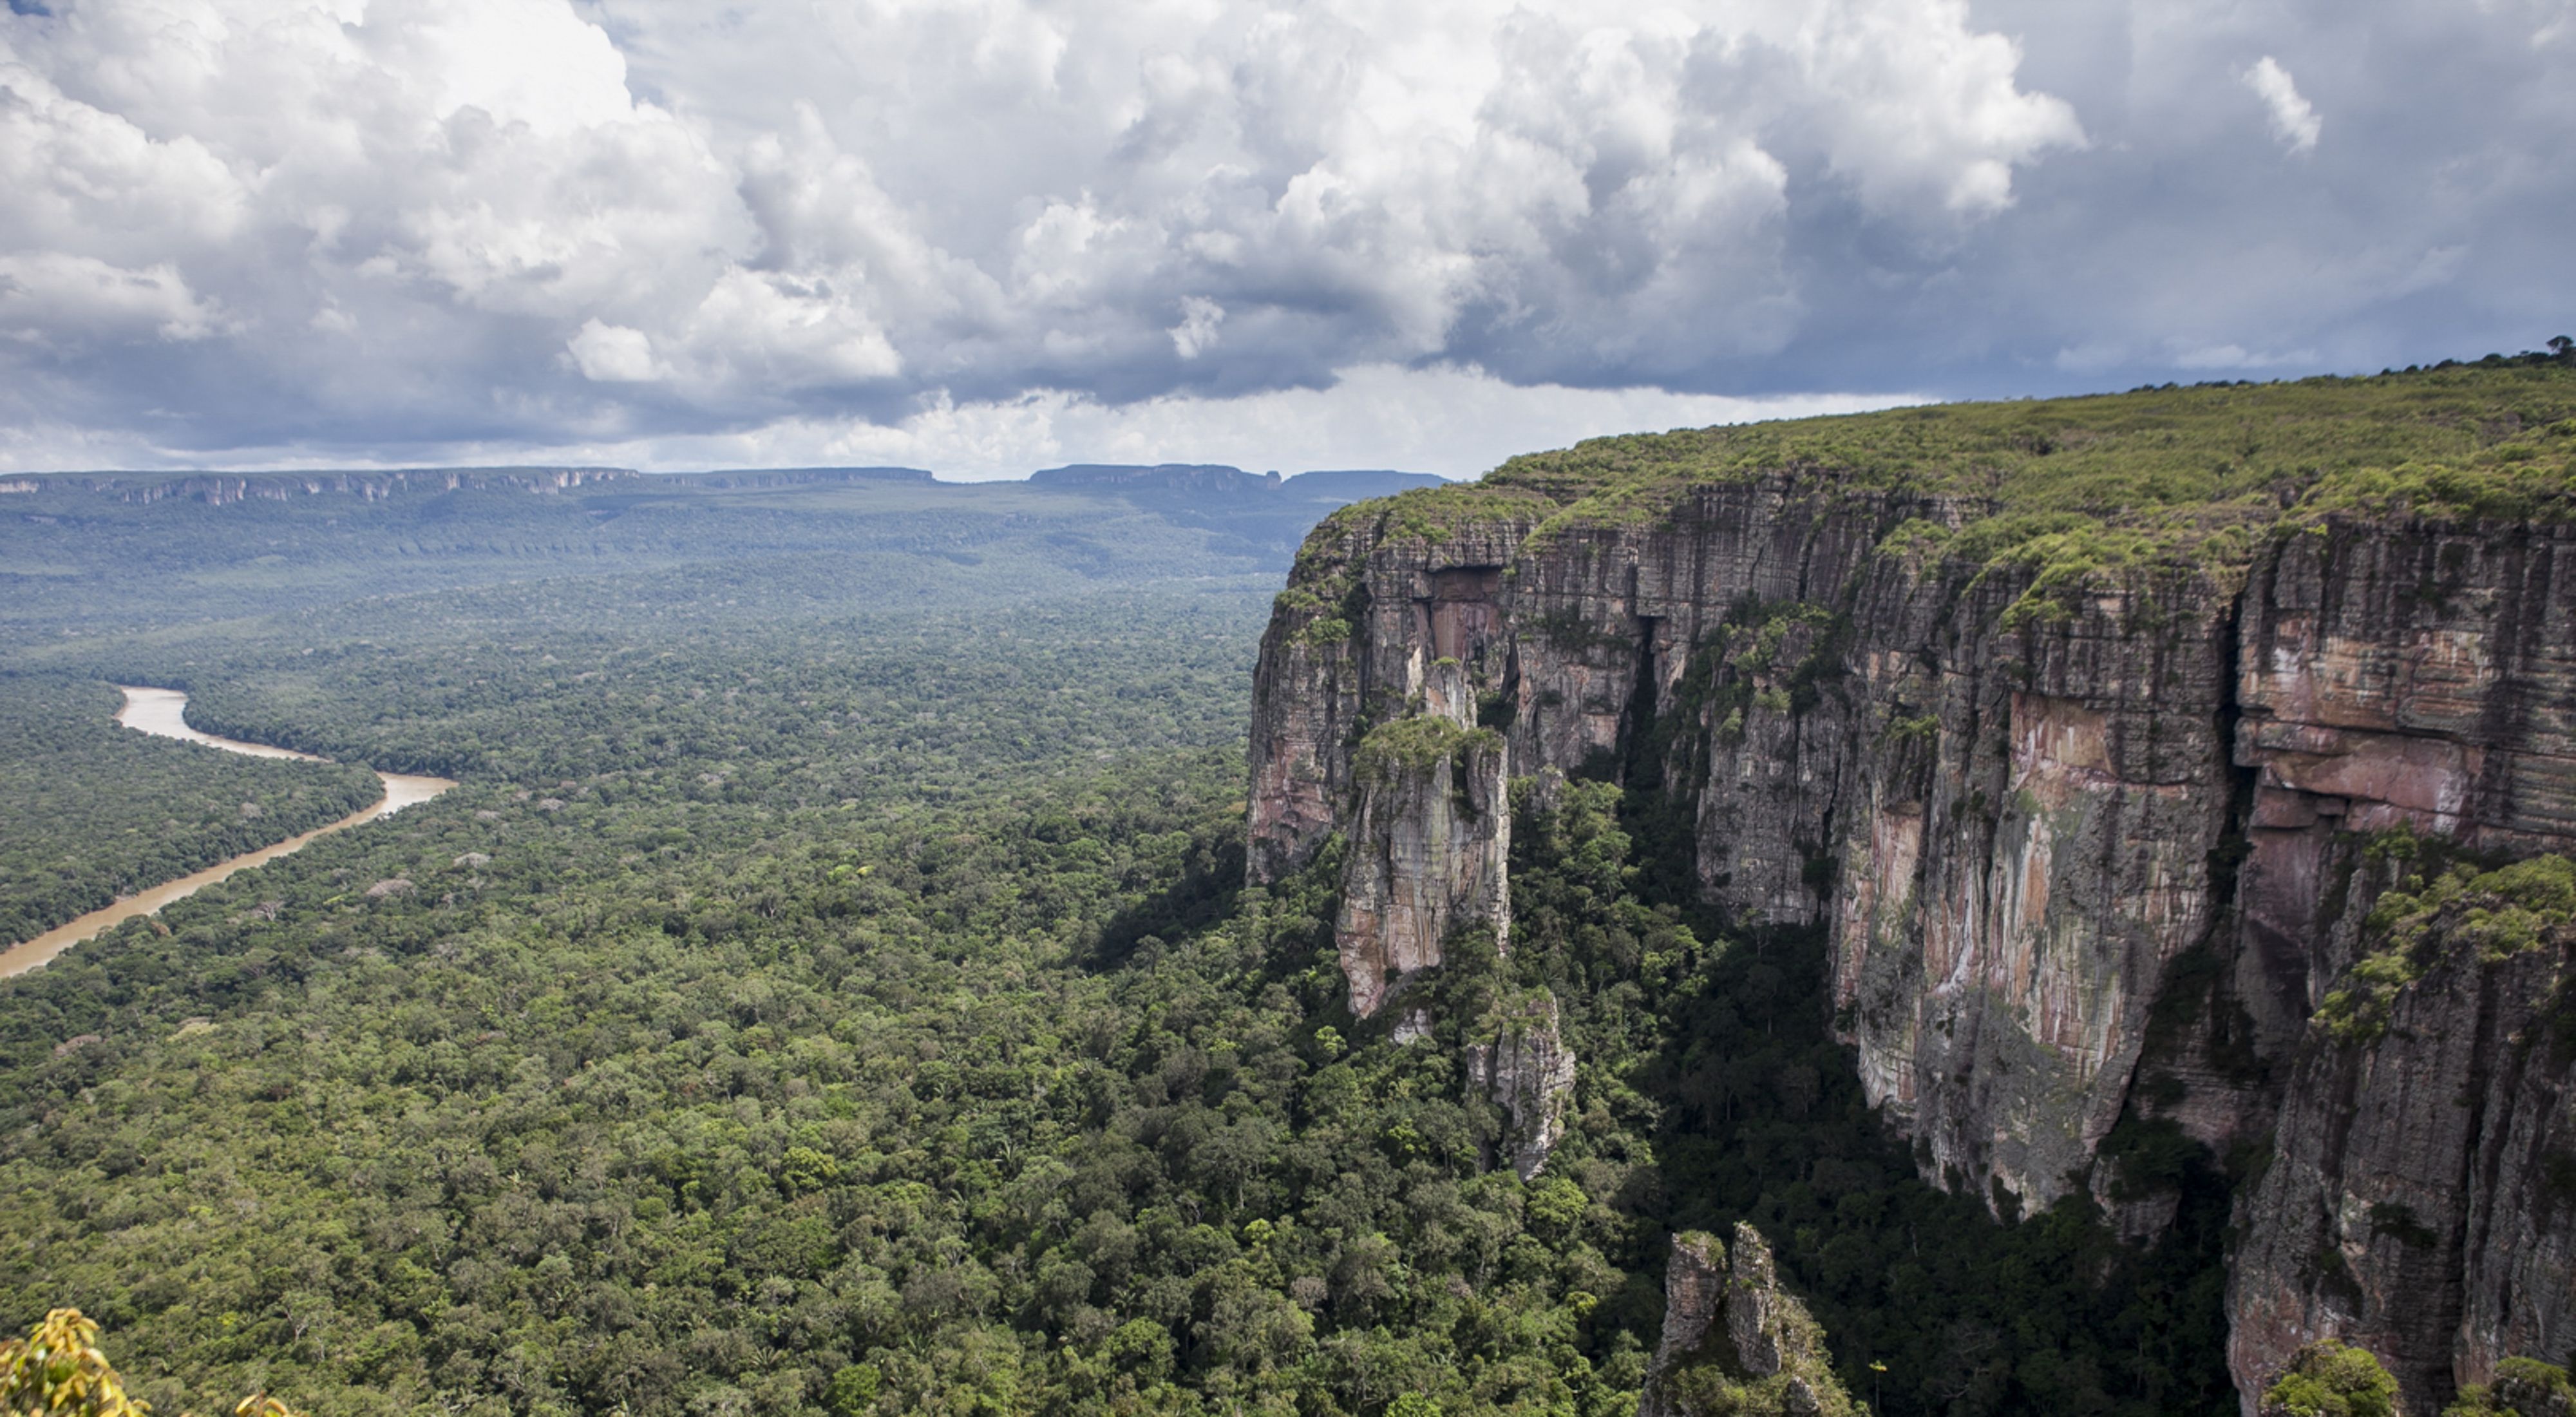 Parque Nacional Natural Sierra de Chiribiquete in Colombia. Photo credit.